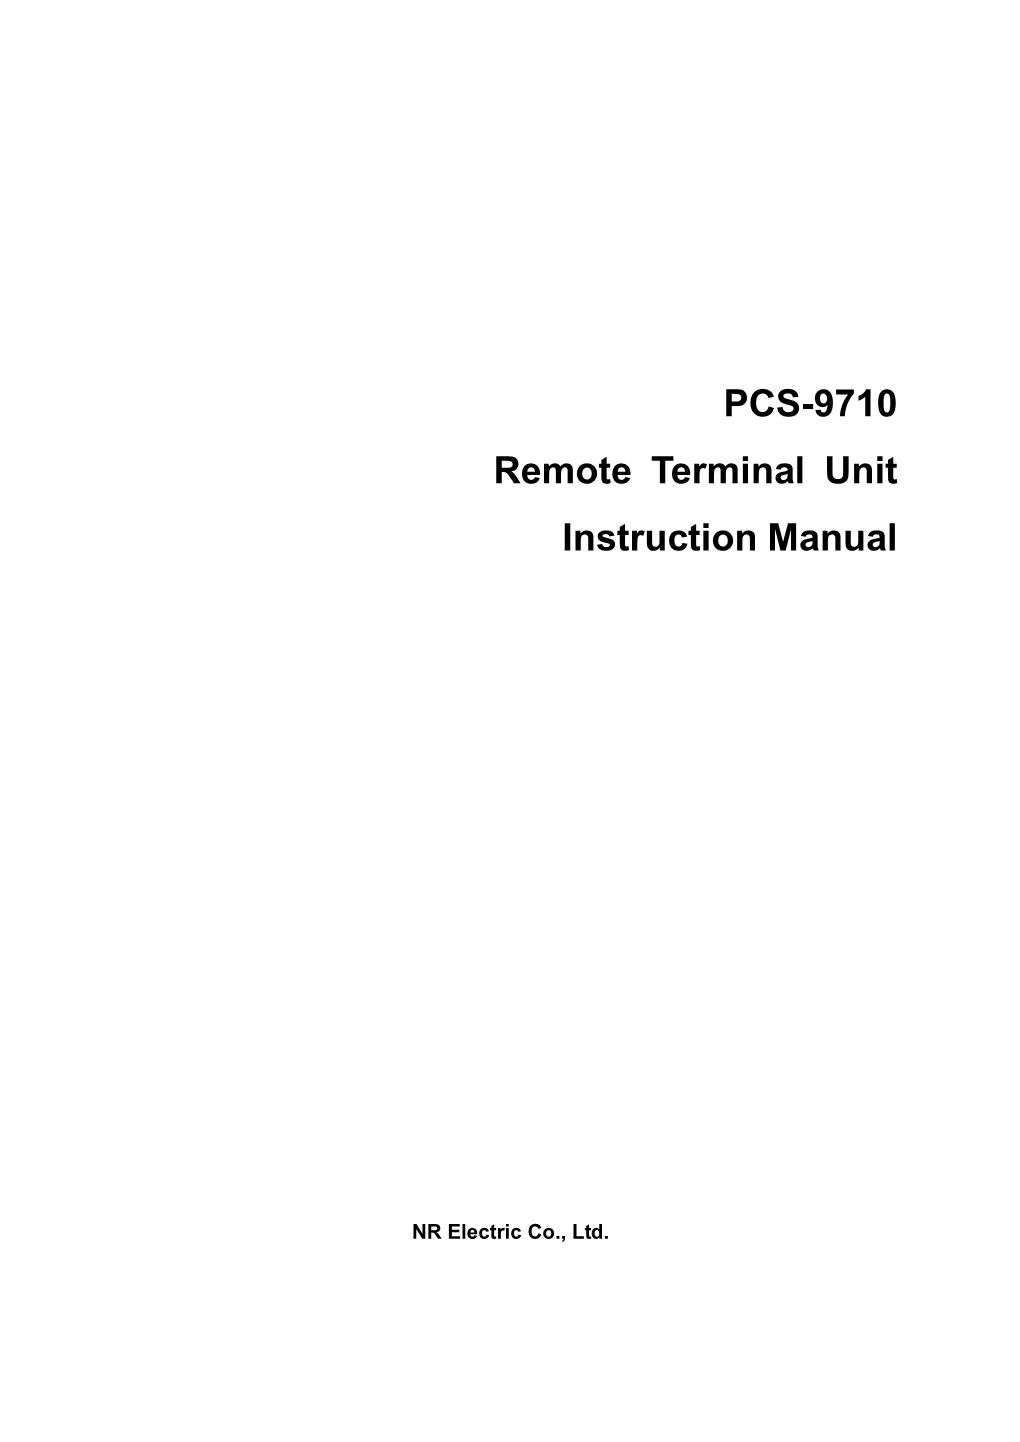 PCS-9710 Remote Terminal Unit Instruction Manual